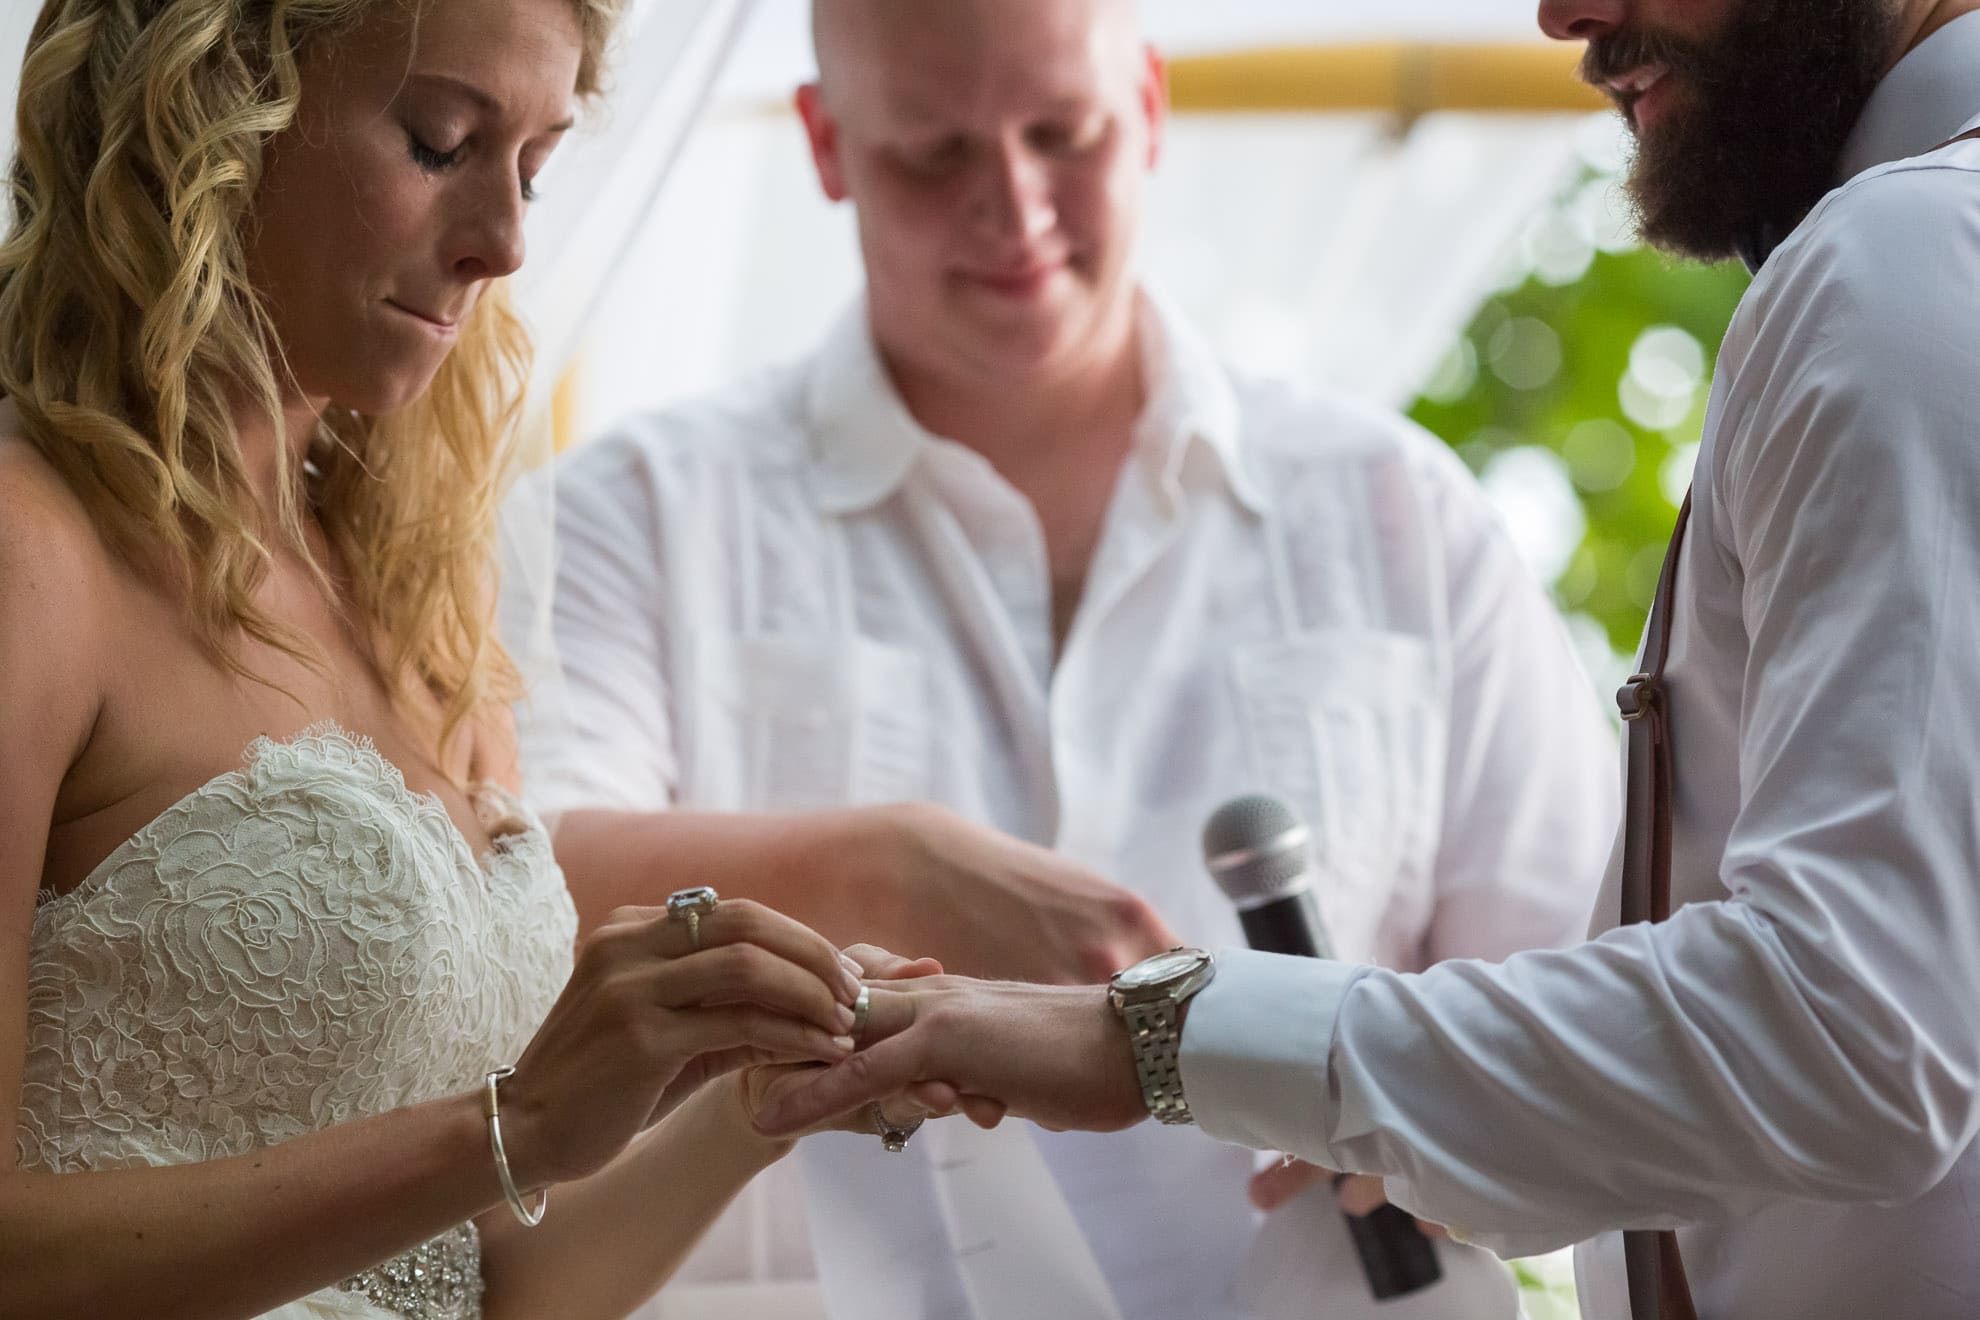 Exchange of wedding rings during wedding ceremony